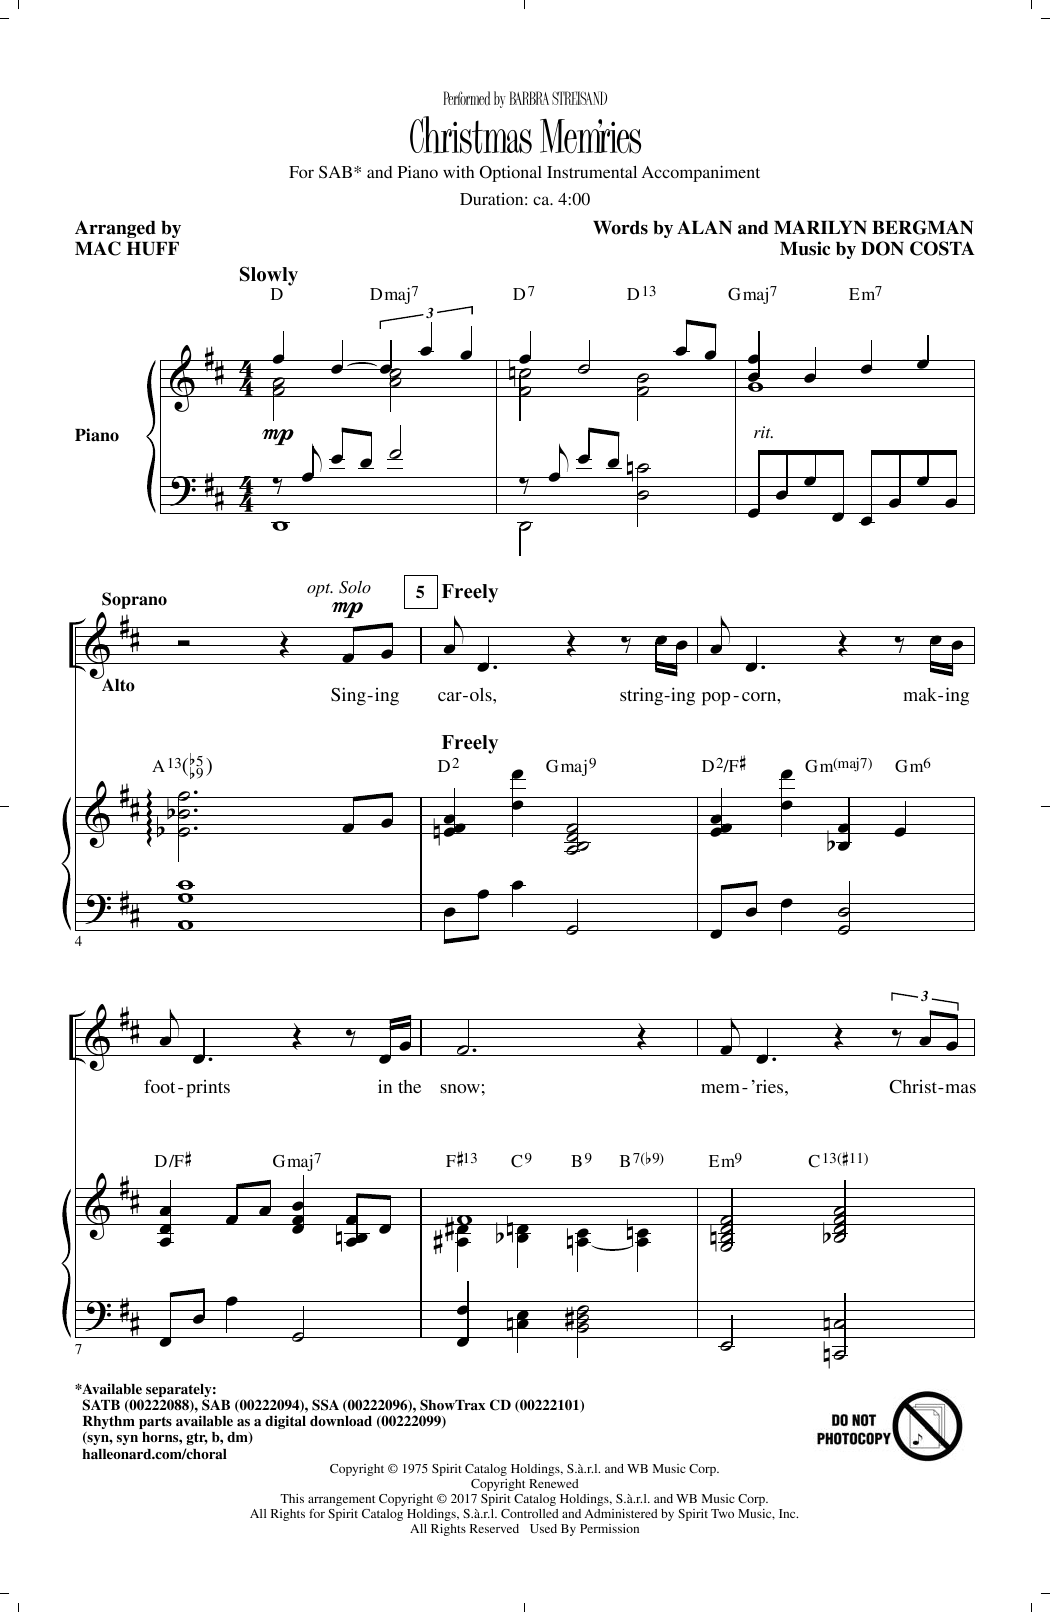 Barbra Streisand Christmas Mem'ries (arr. Mac Huff) sheet music notes and chords arranged for SAB Choir